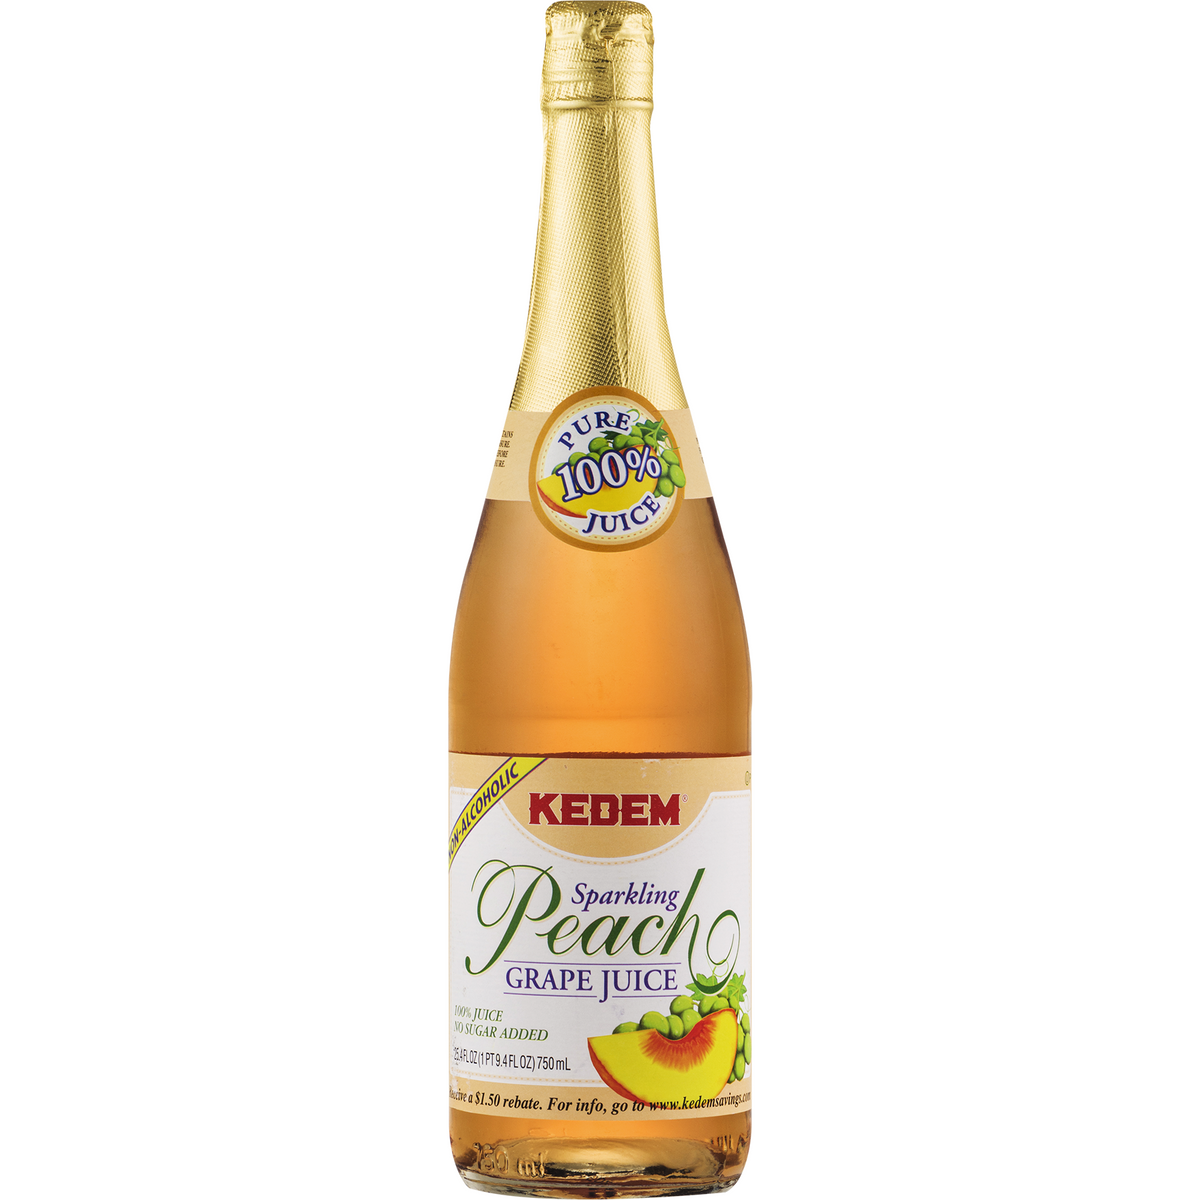 kedem-sparkling-peach-grape-juice-750ml